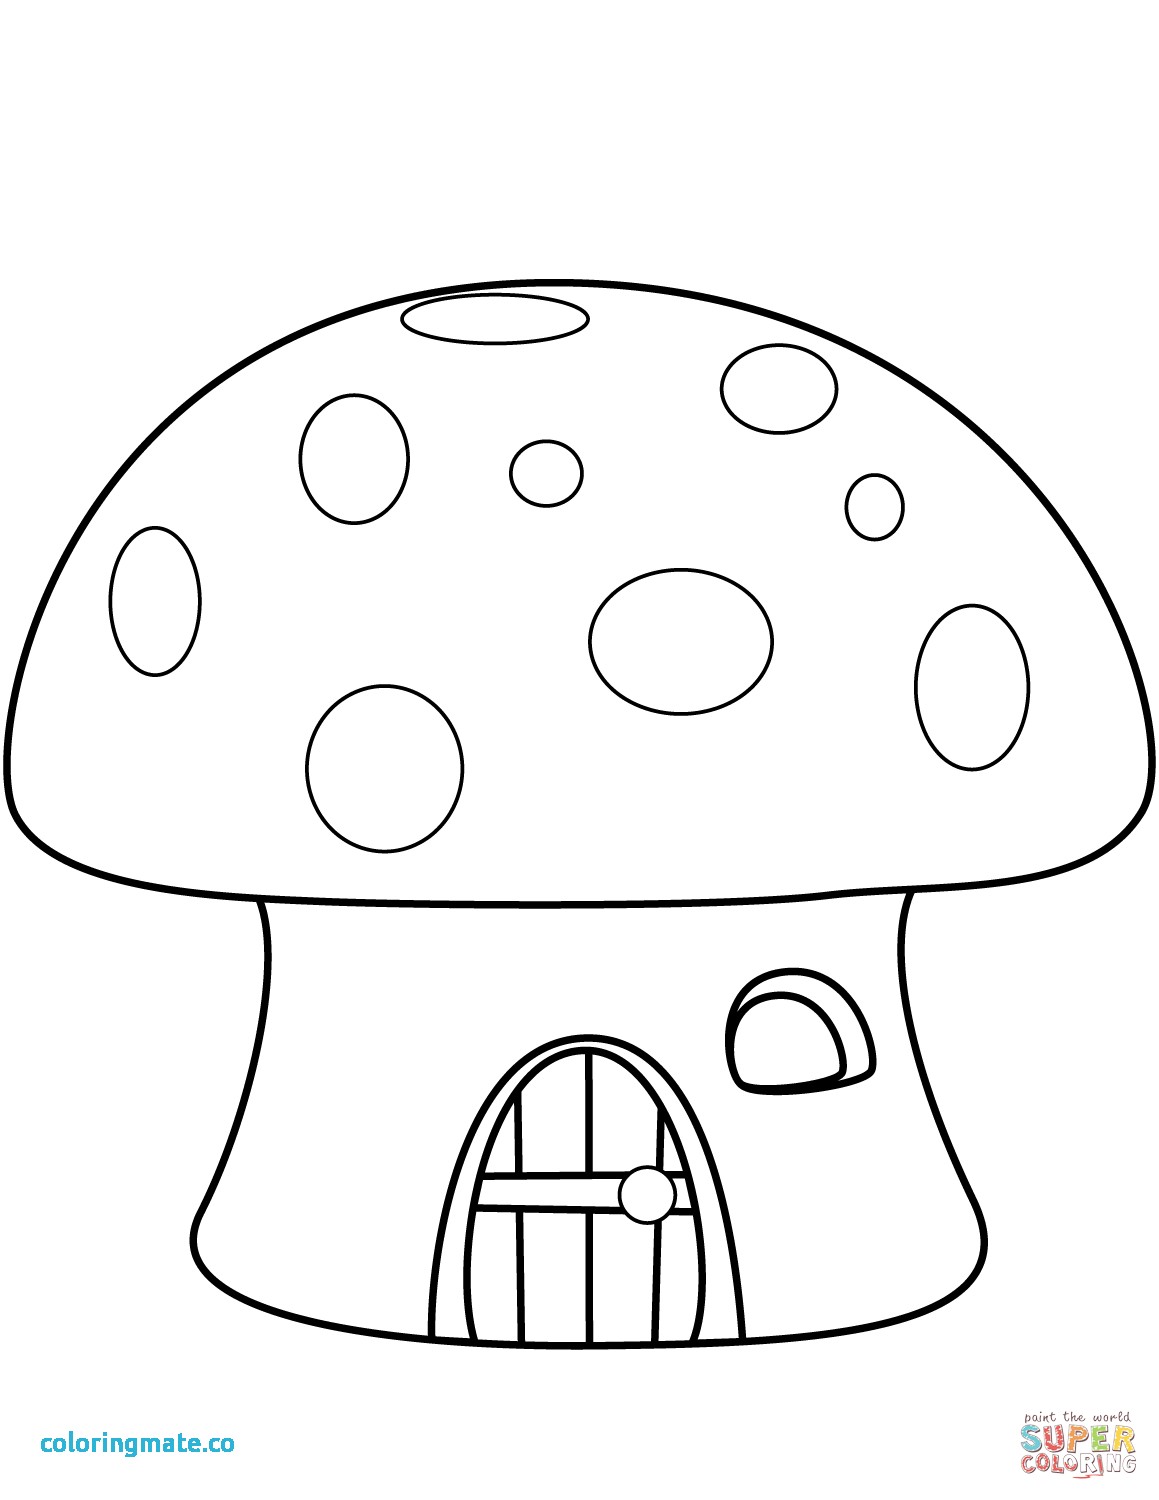 Free Printable Mushroom Coloring Pages at GetDrawings | Free download